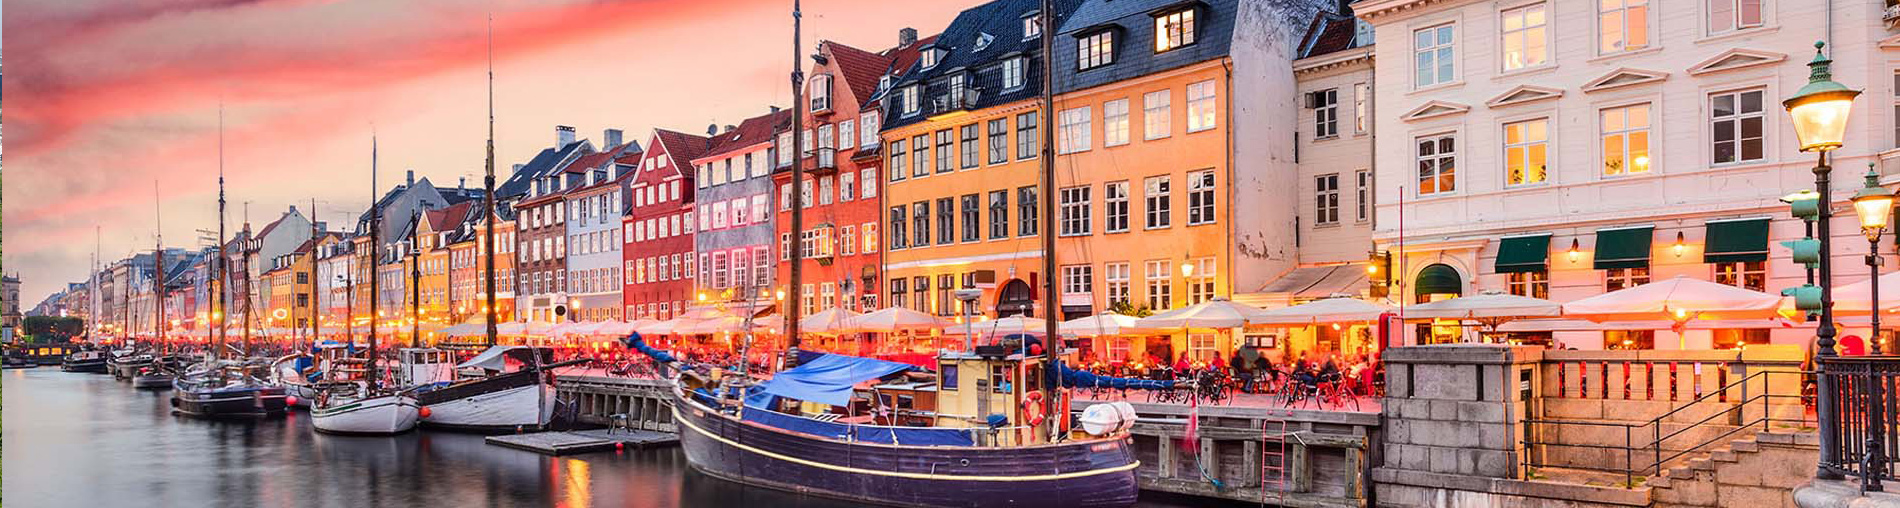 Best Time To Visit Denmark